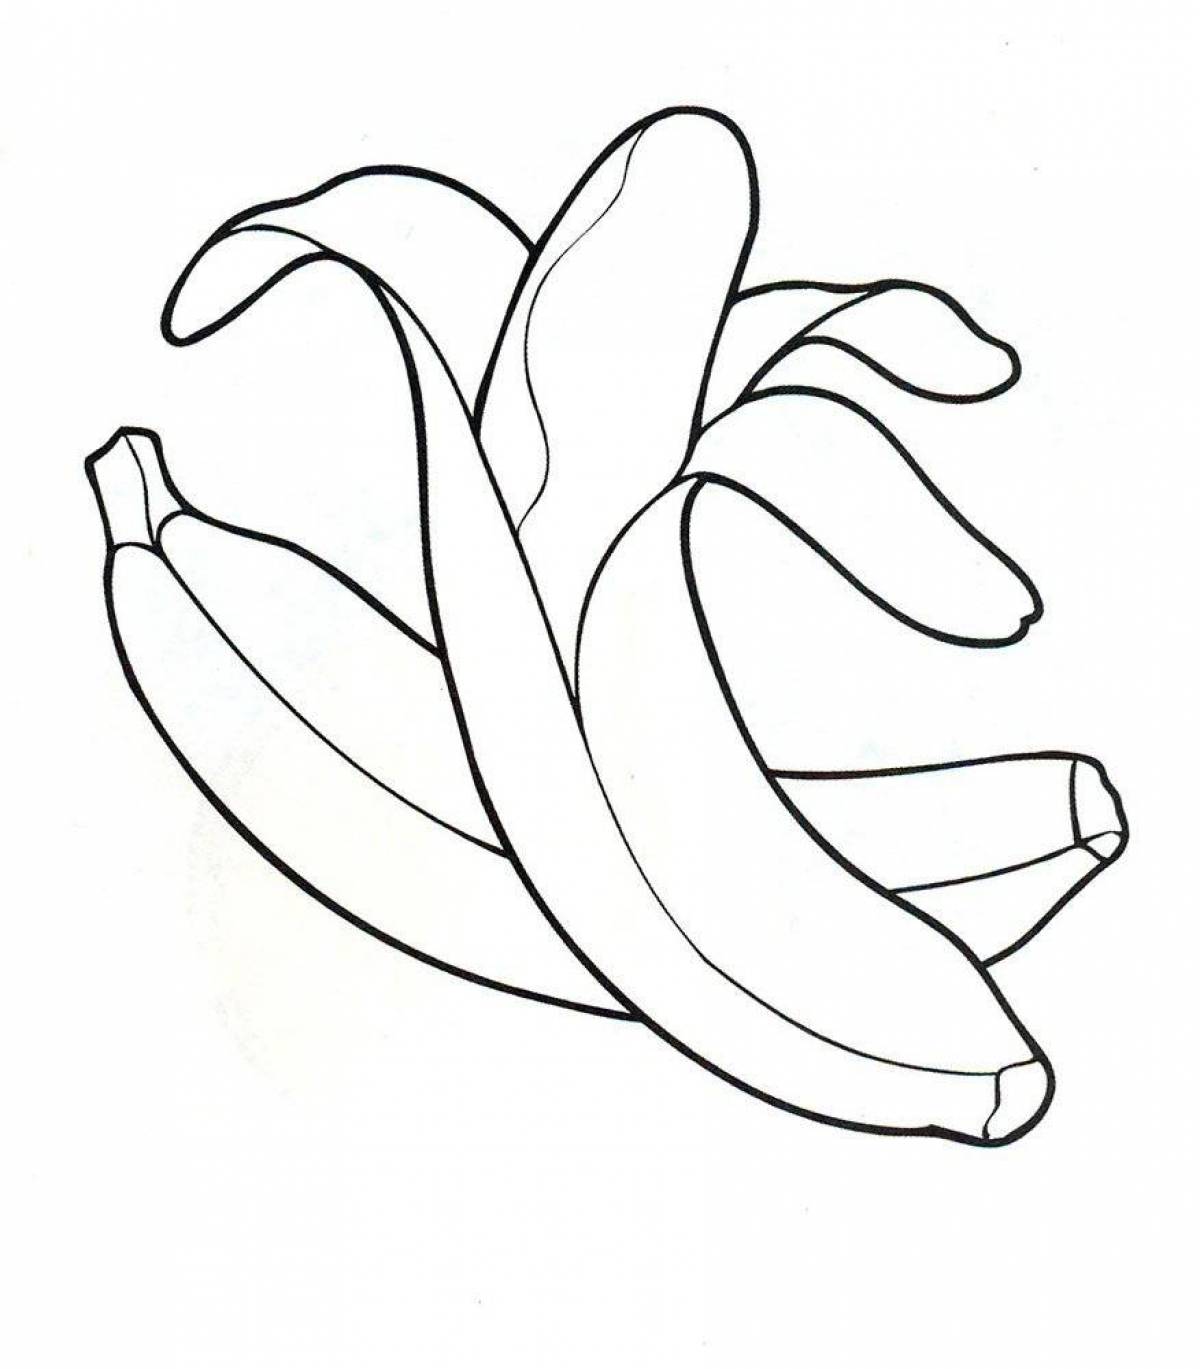 A fun banana coloring book for kids